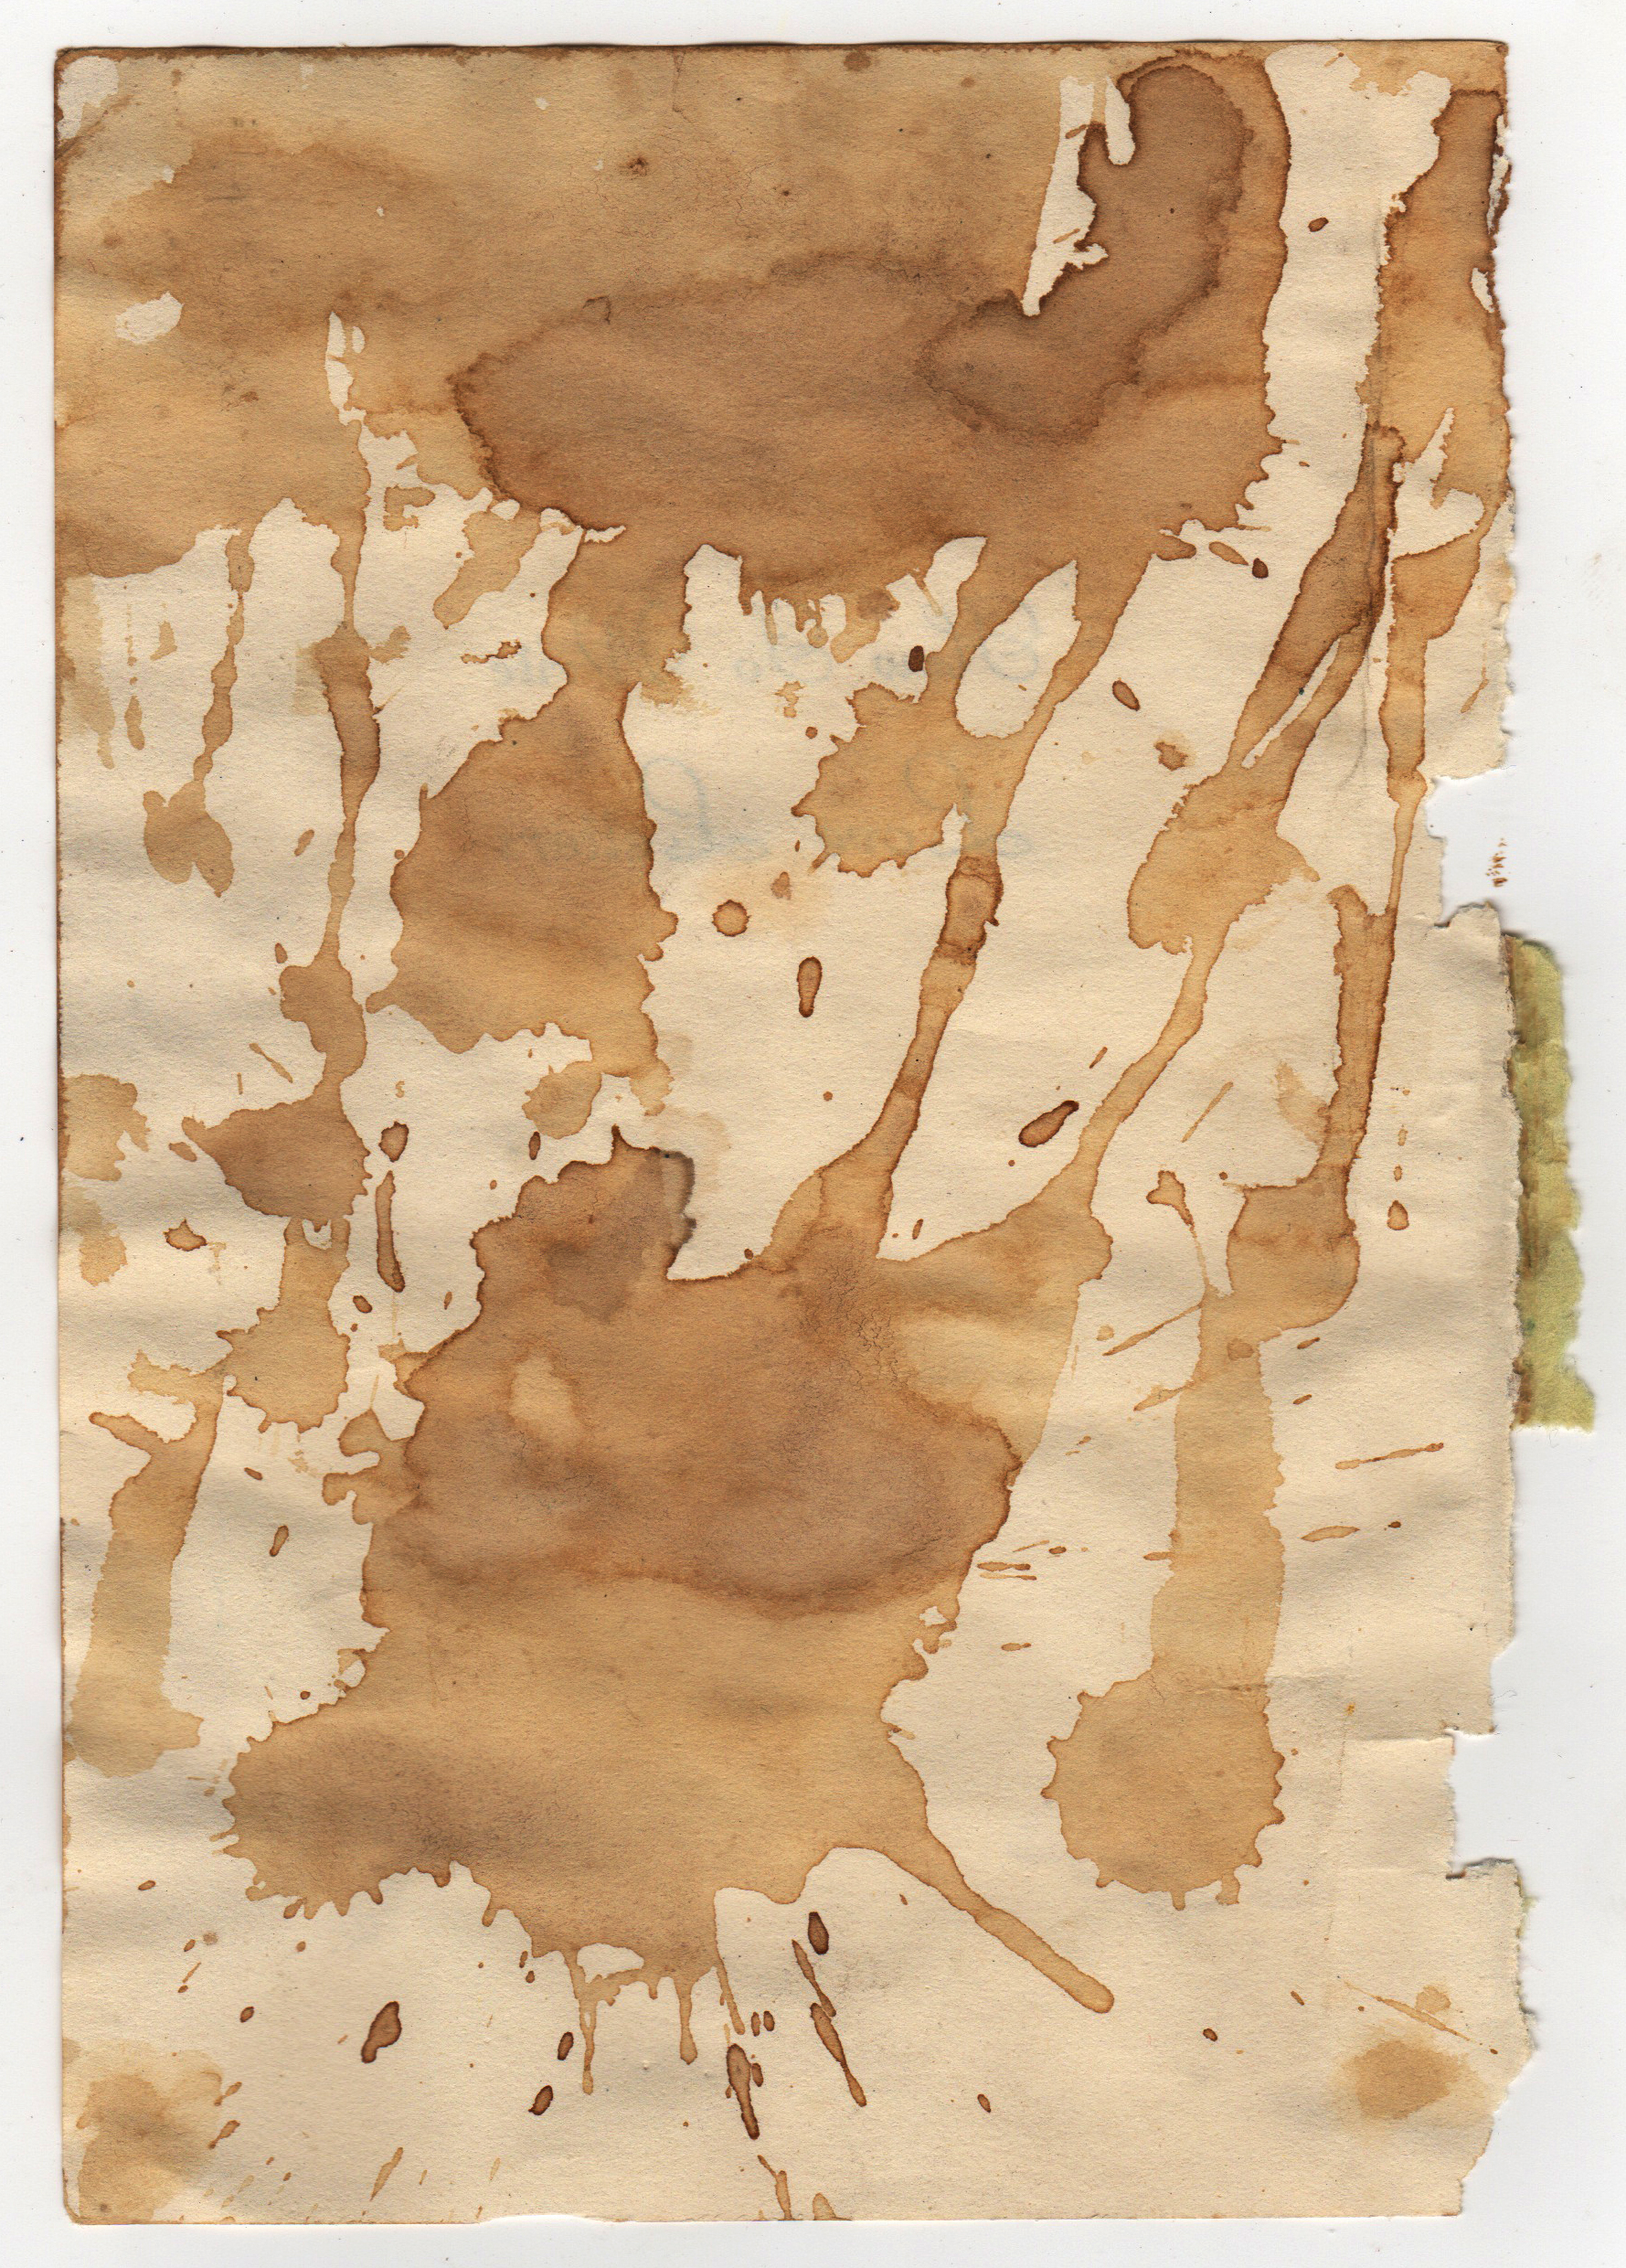 Splattered paper texture photo